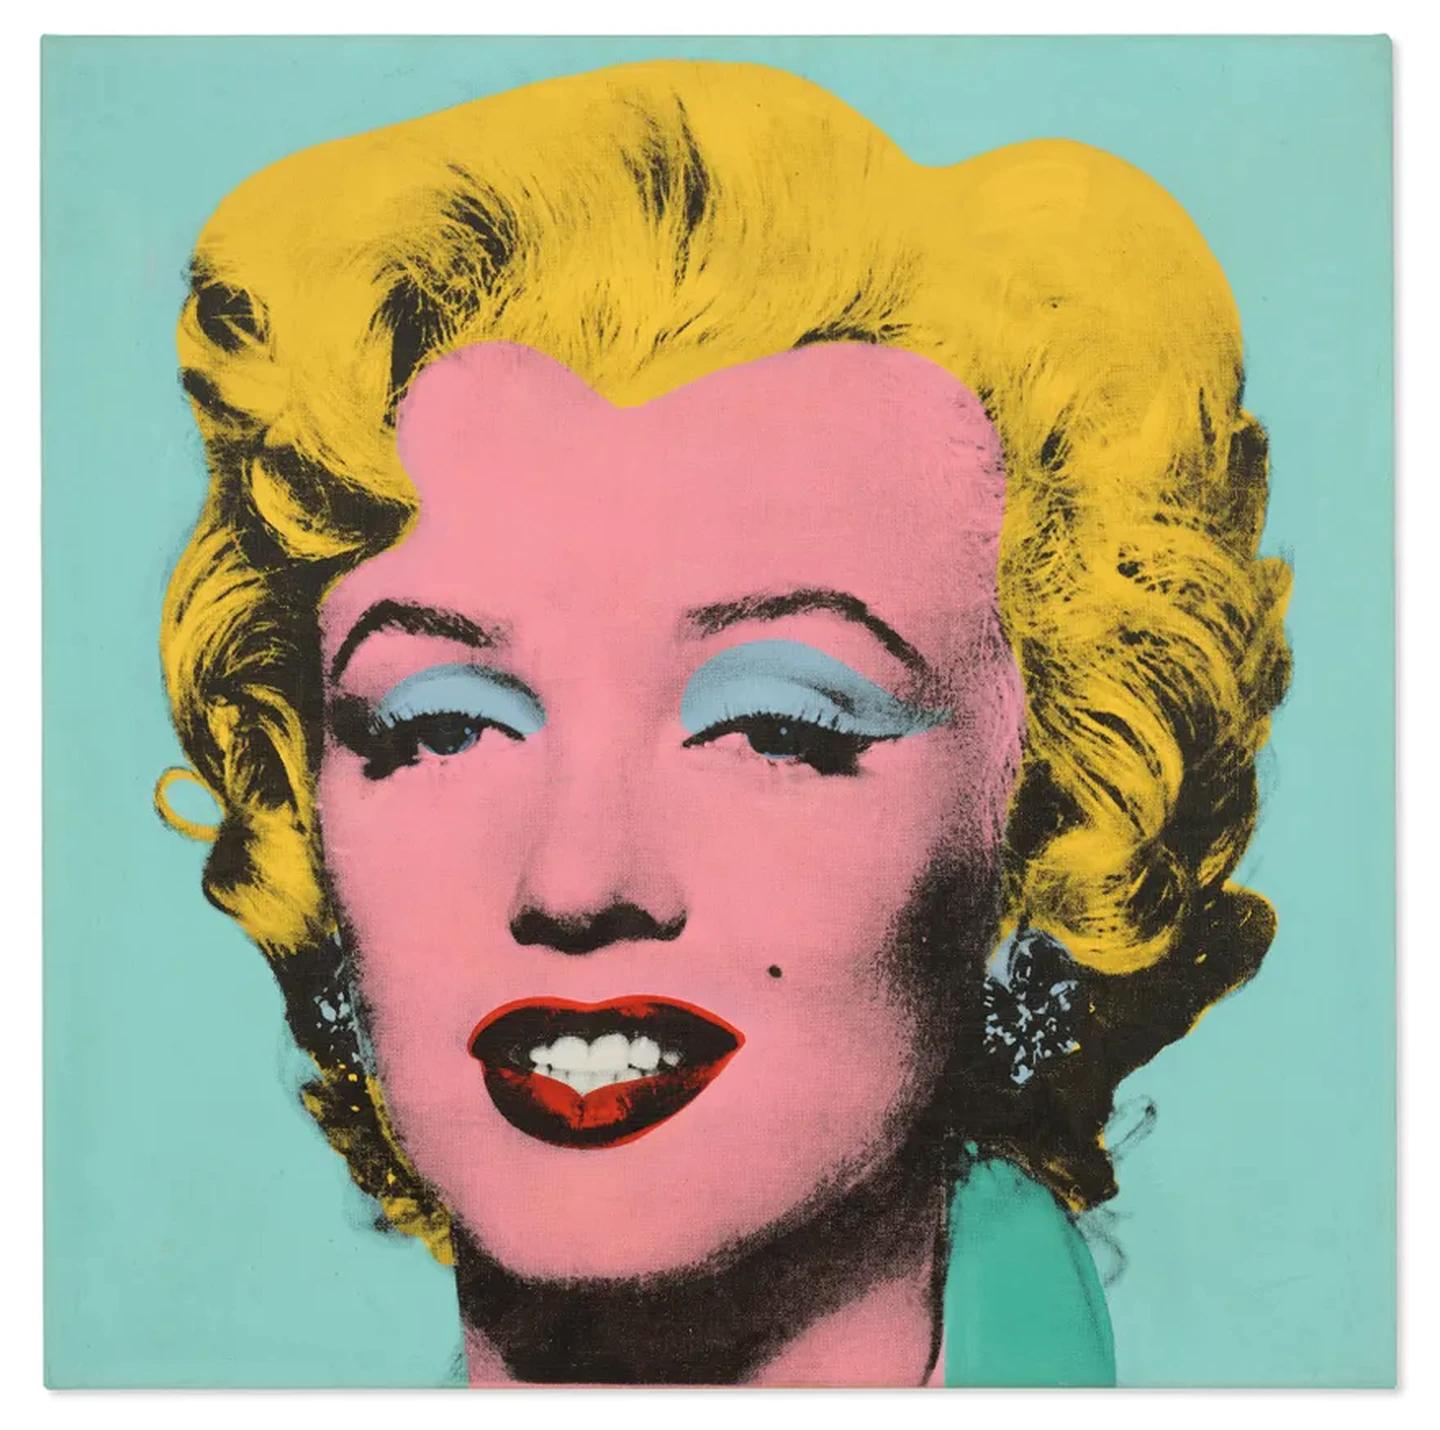 “Marilyn”: la obra de Andy Warhol que se vendió en U$S 195 millones y rompió un récord